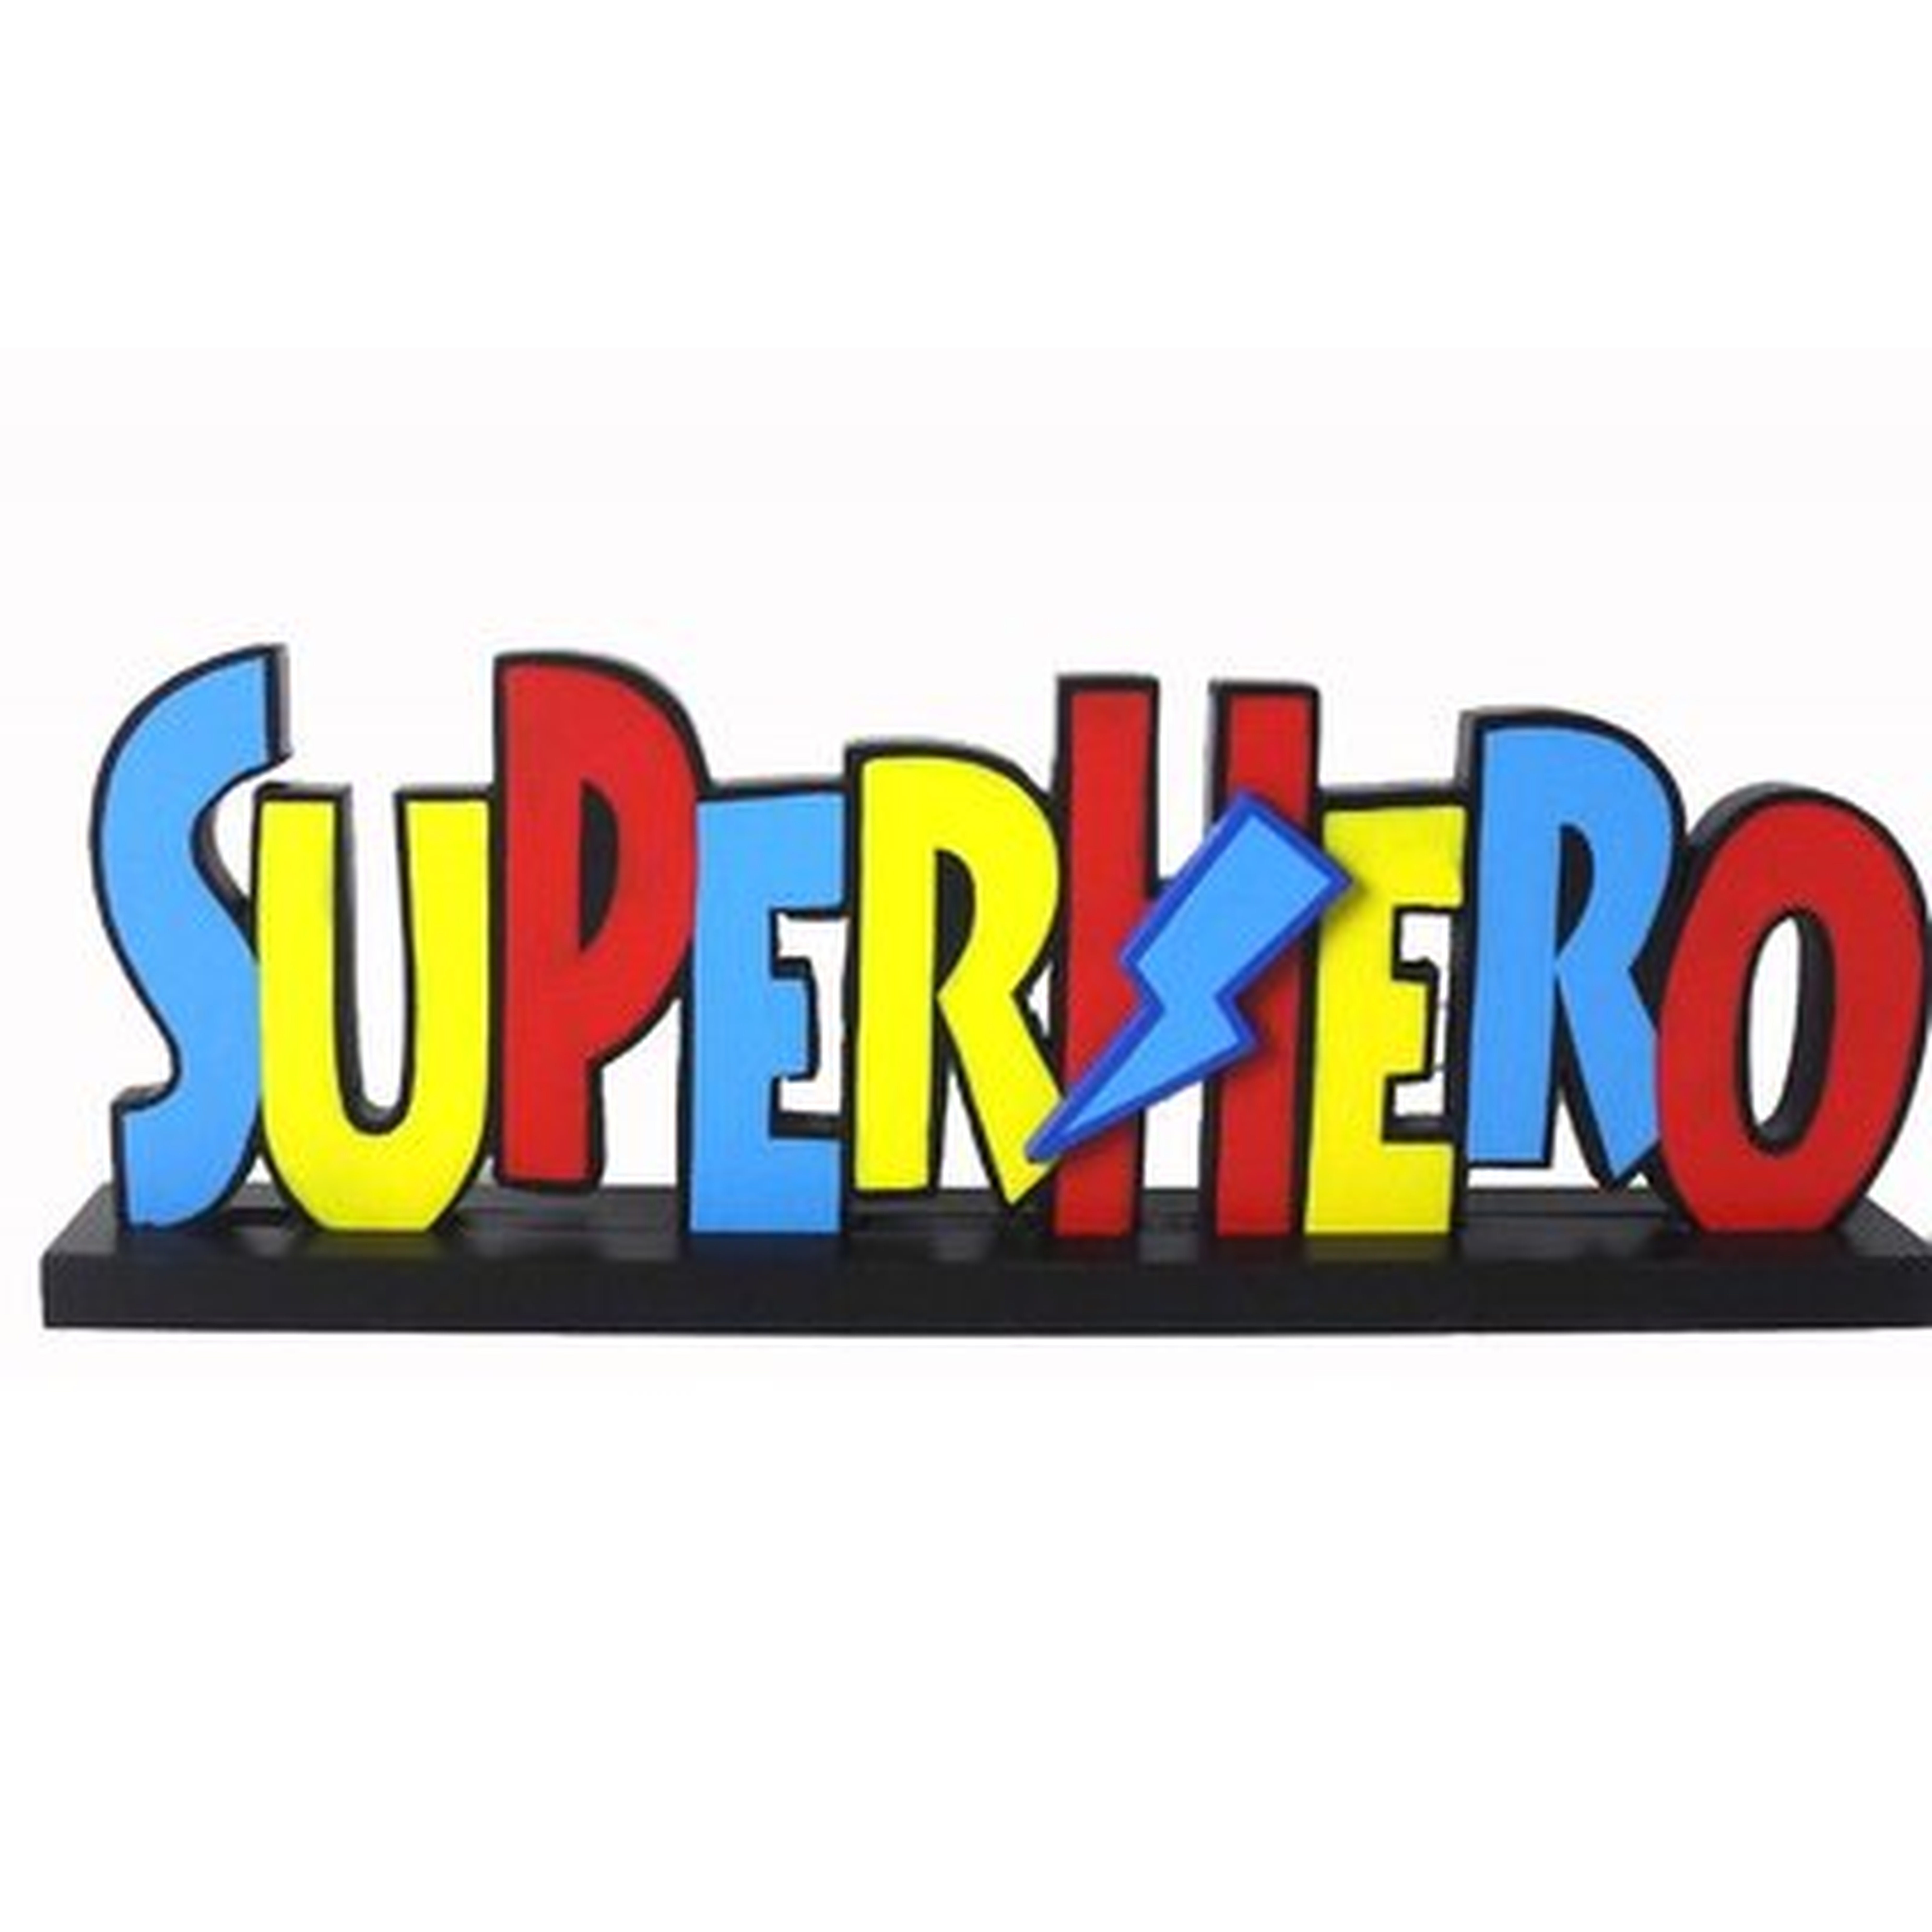 Whiddon Superhero Tabletop - Wayfair